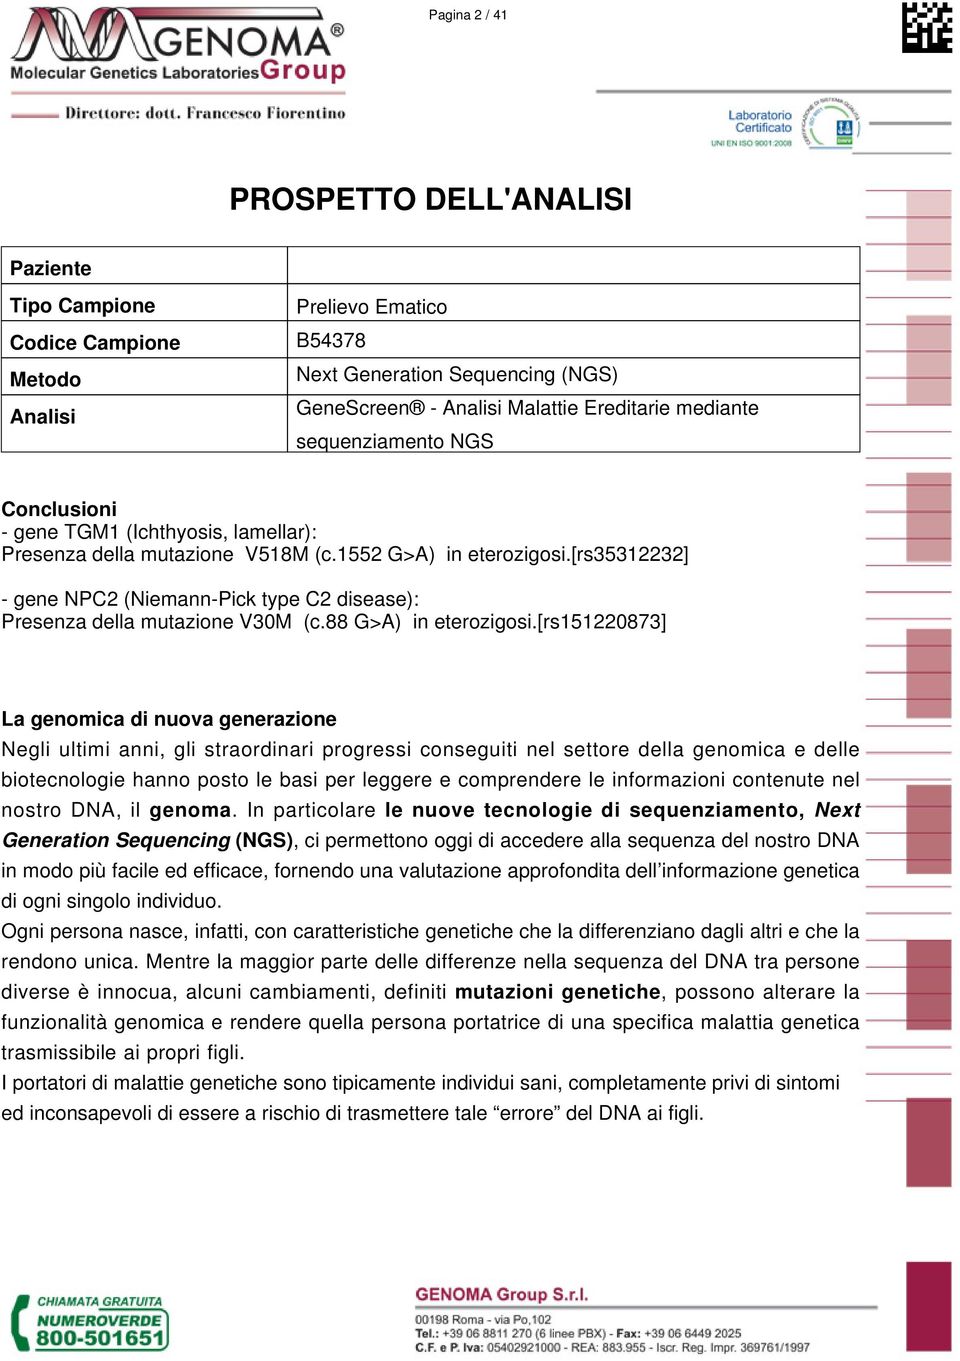 [rs35312232] - gene NPC2 (Niemann-Pick type C2 disease): Presenza della mutazione V30M (c.88 G>A) in eterozigosi.